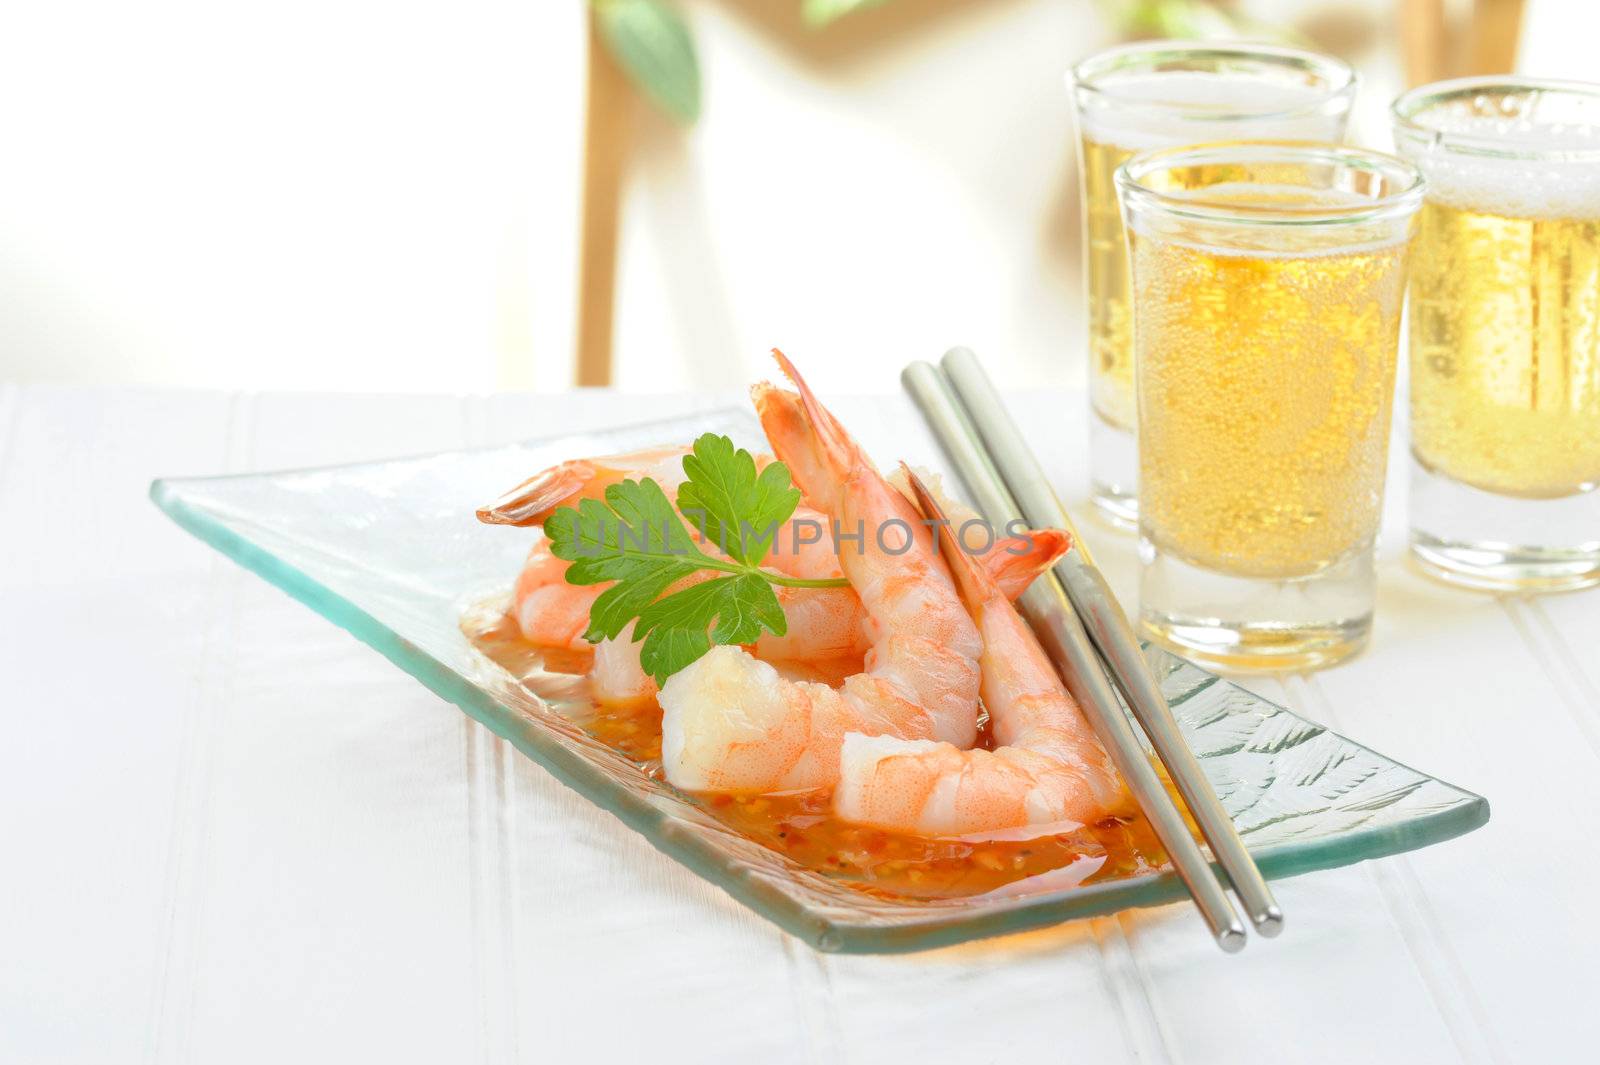 Oriental shrimp appetizer served with glasses of beer.